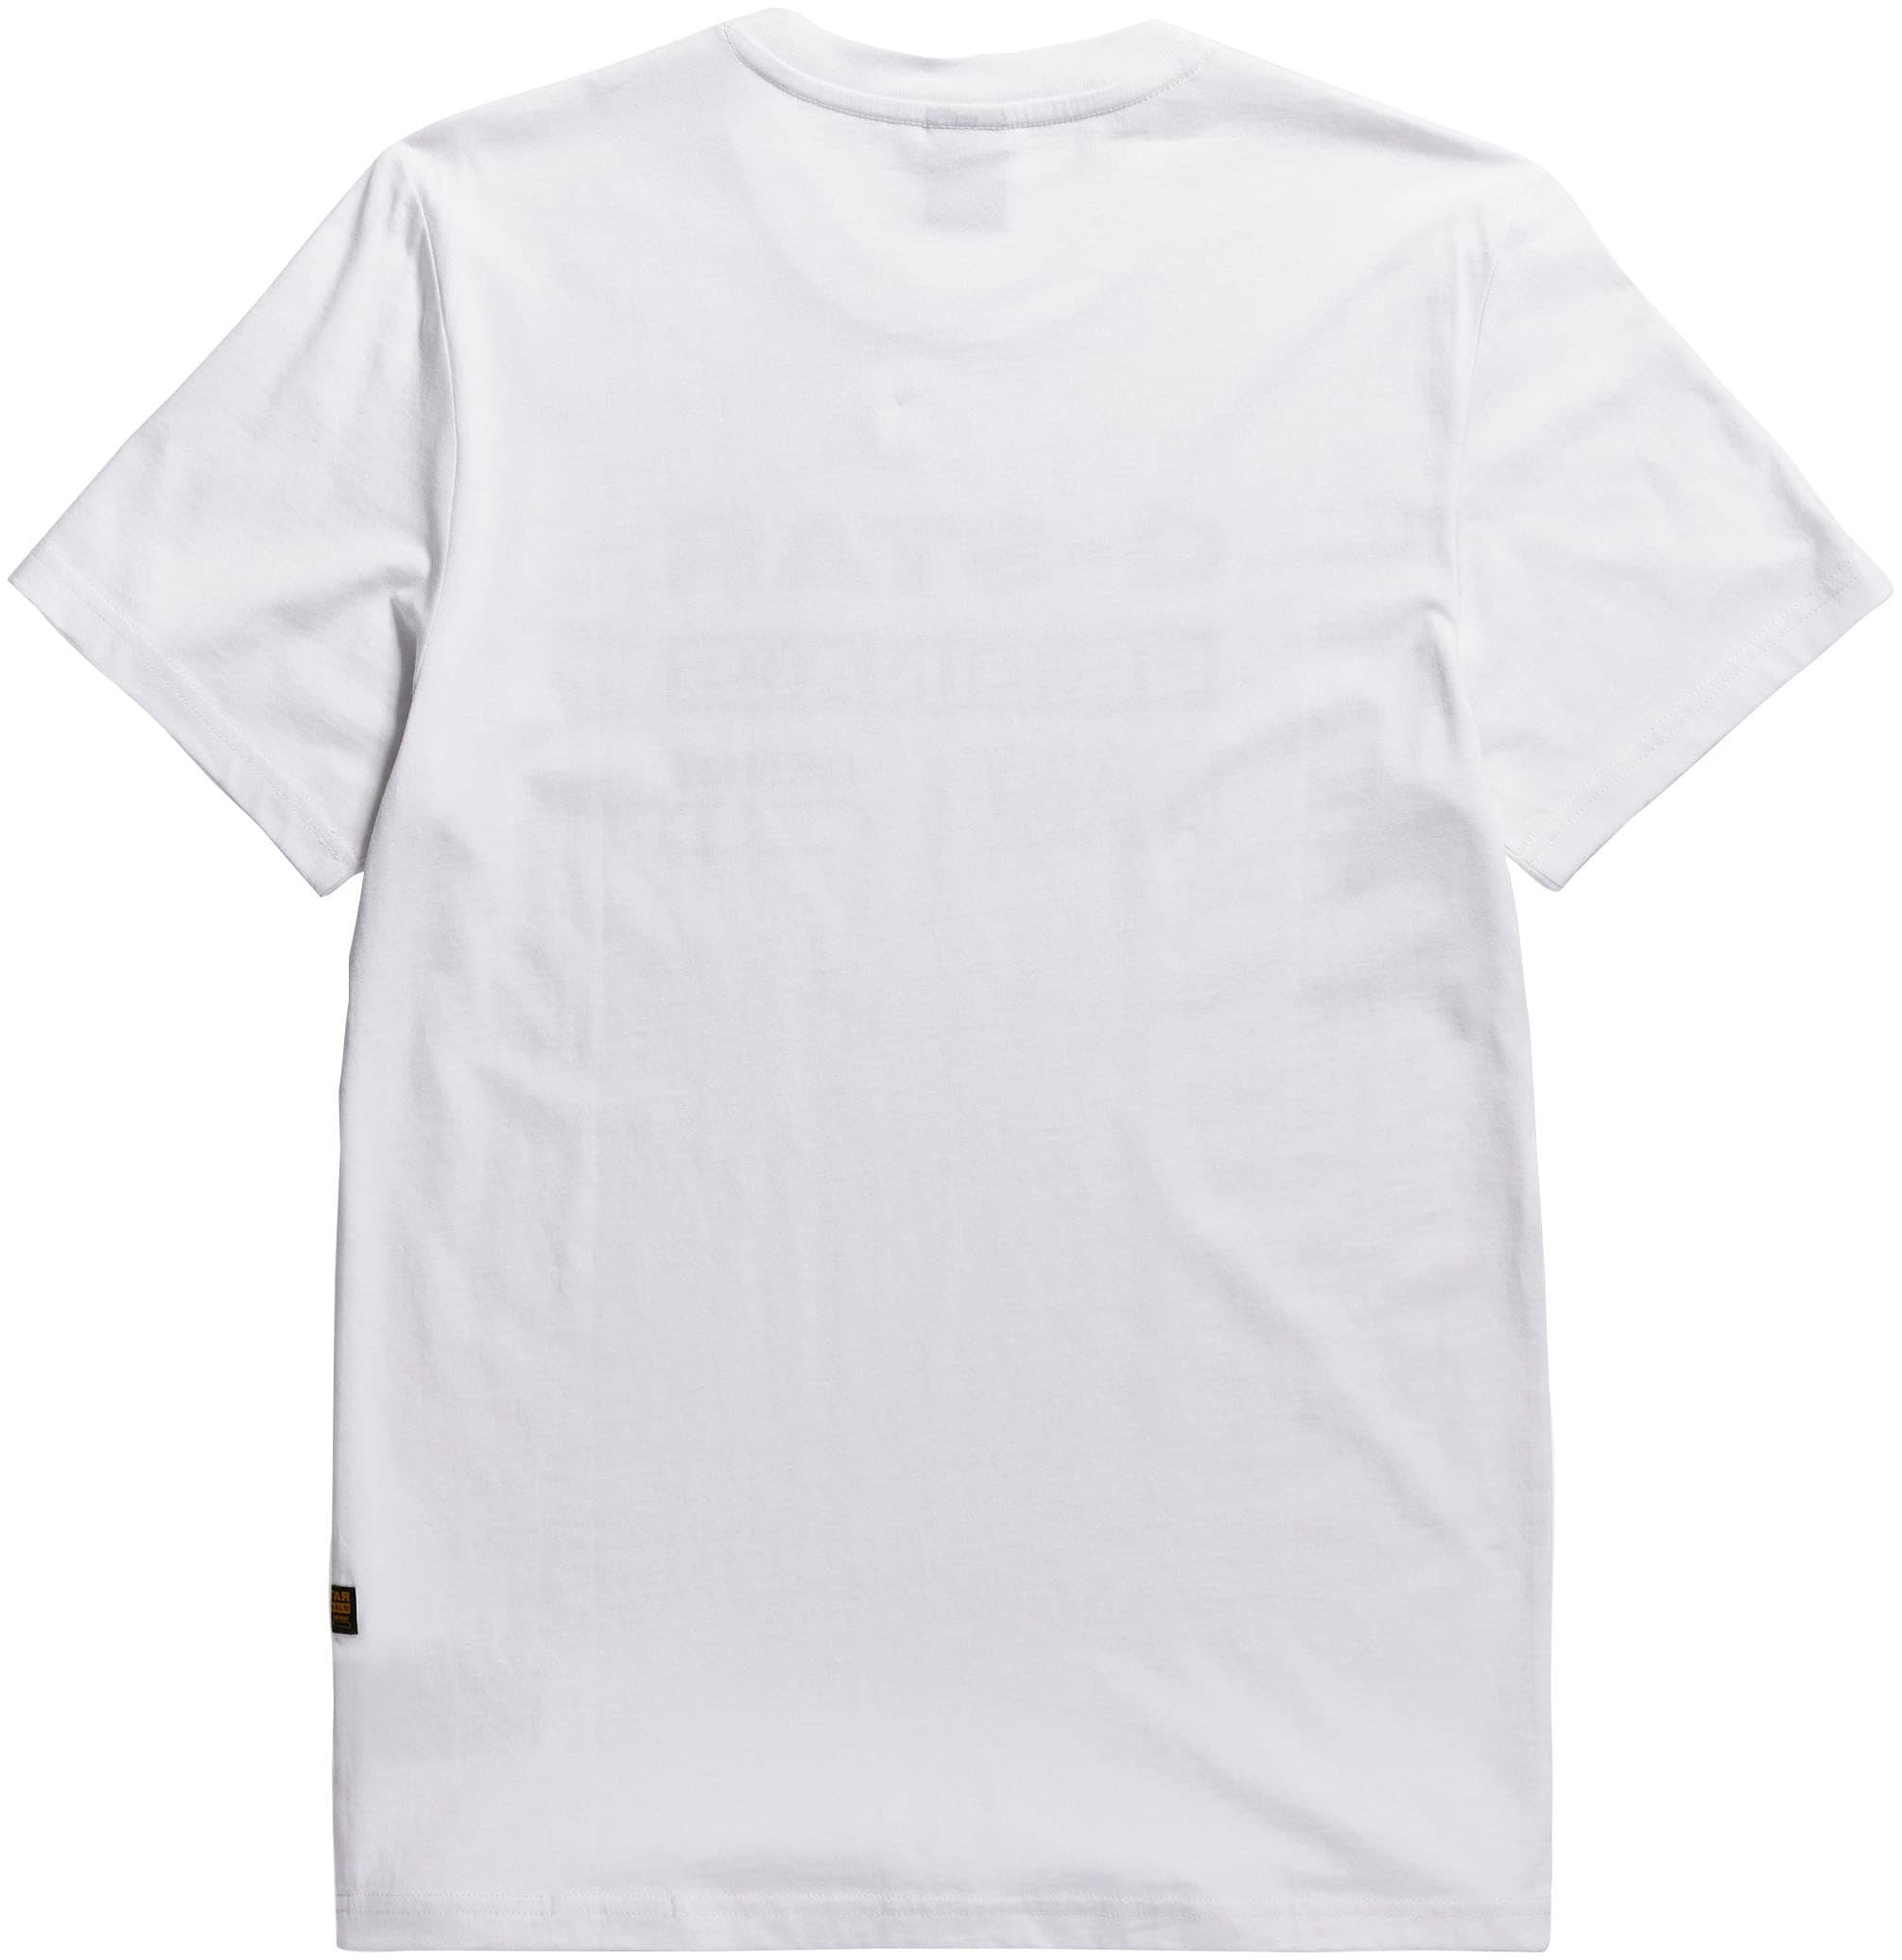 G-Star RAW T-Shirt »Distressed originals«